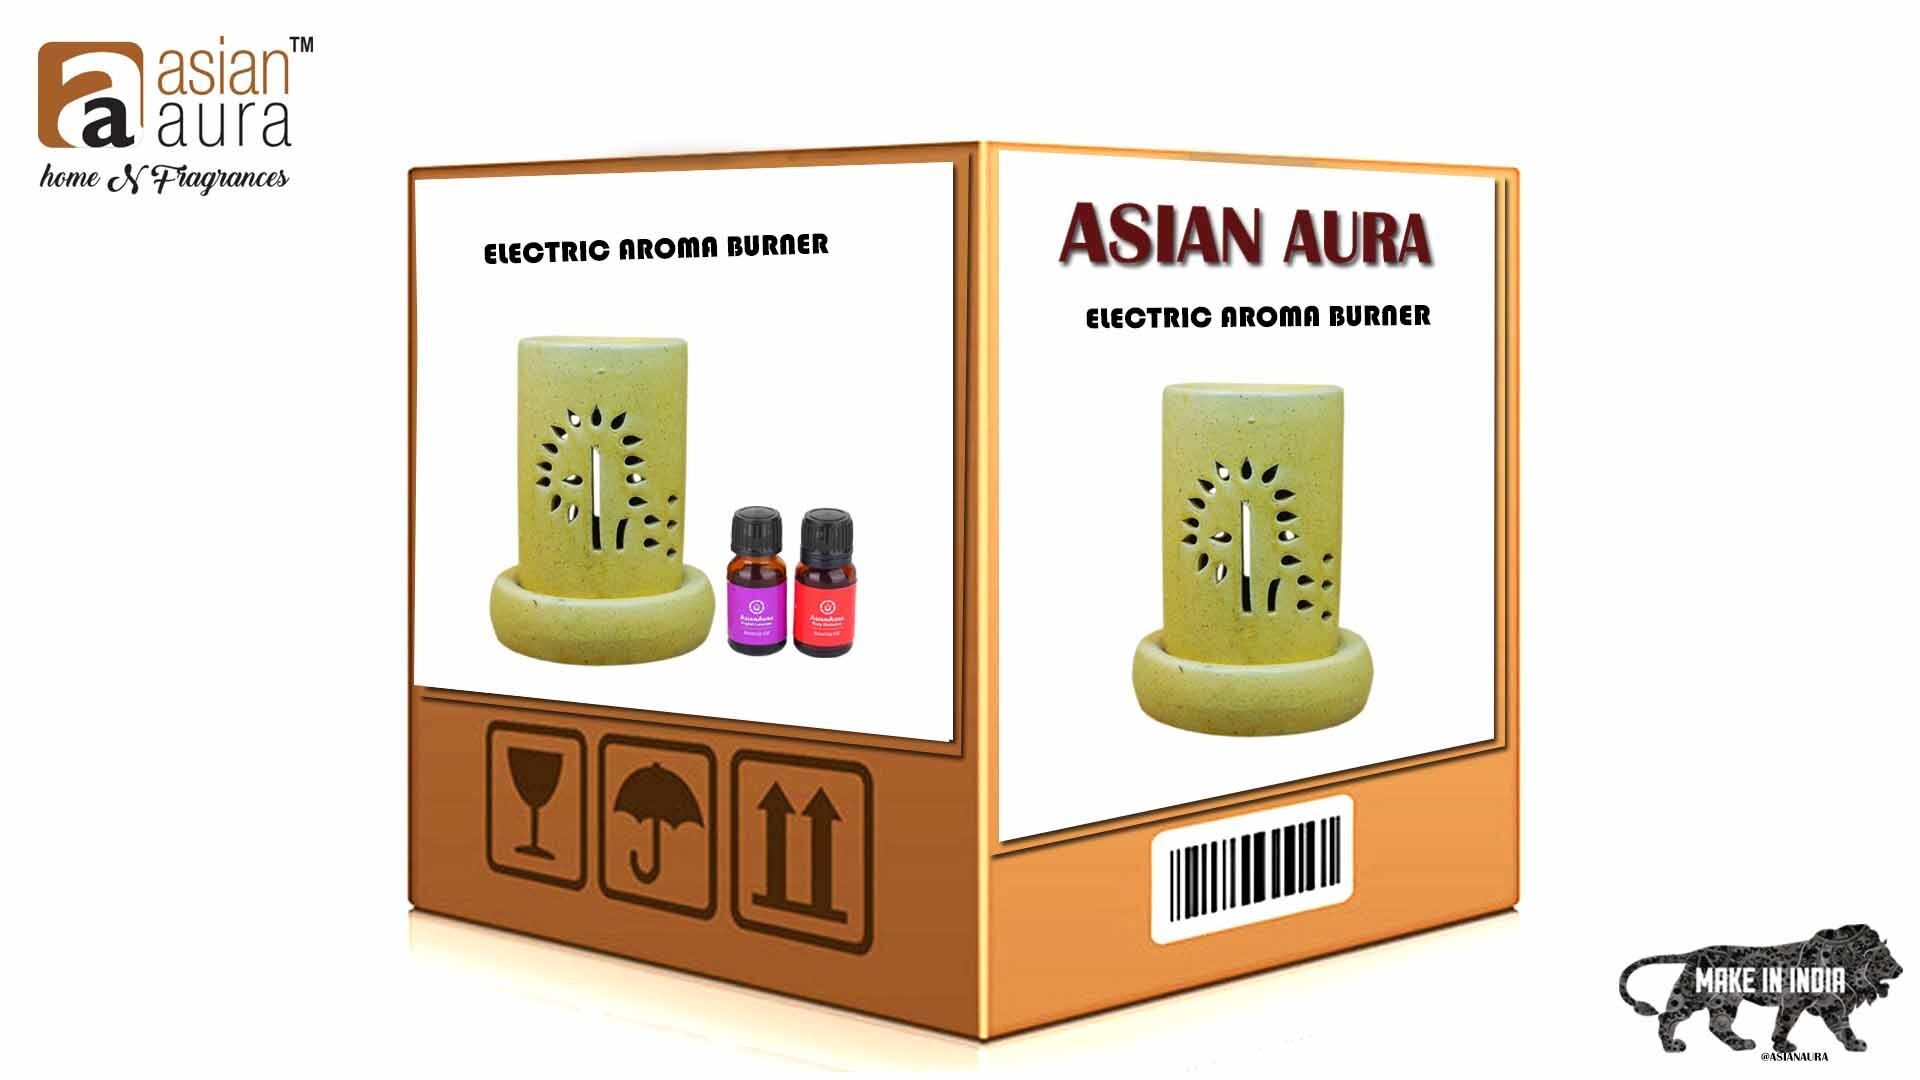 Asian Aura Ceramic Aromatic Oil Diffuser with 2 oil bottles AAEB 0017-B